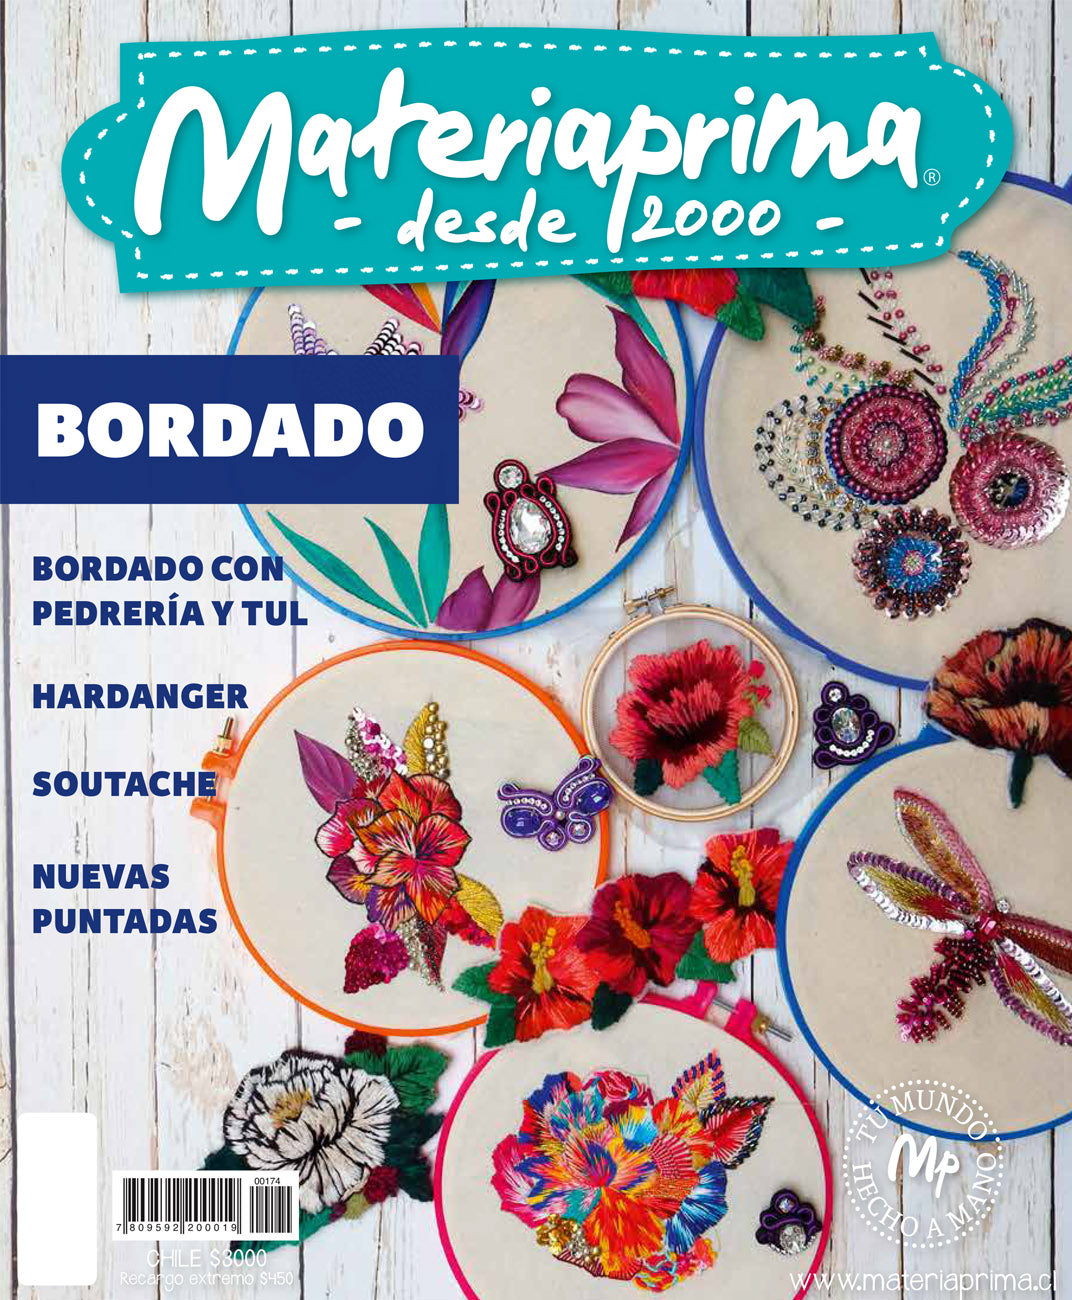 Revista Materiaprima 174 - Digital